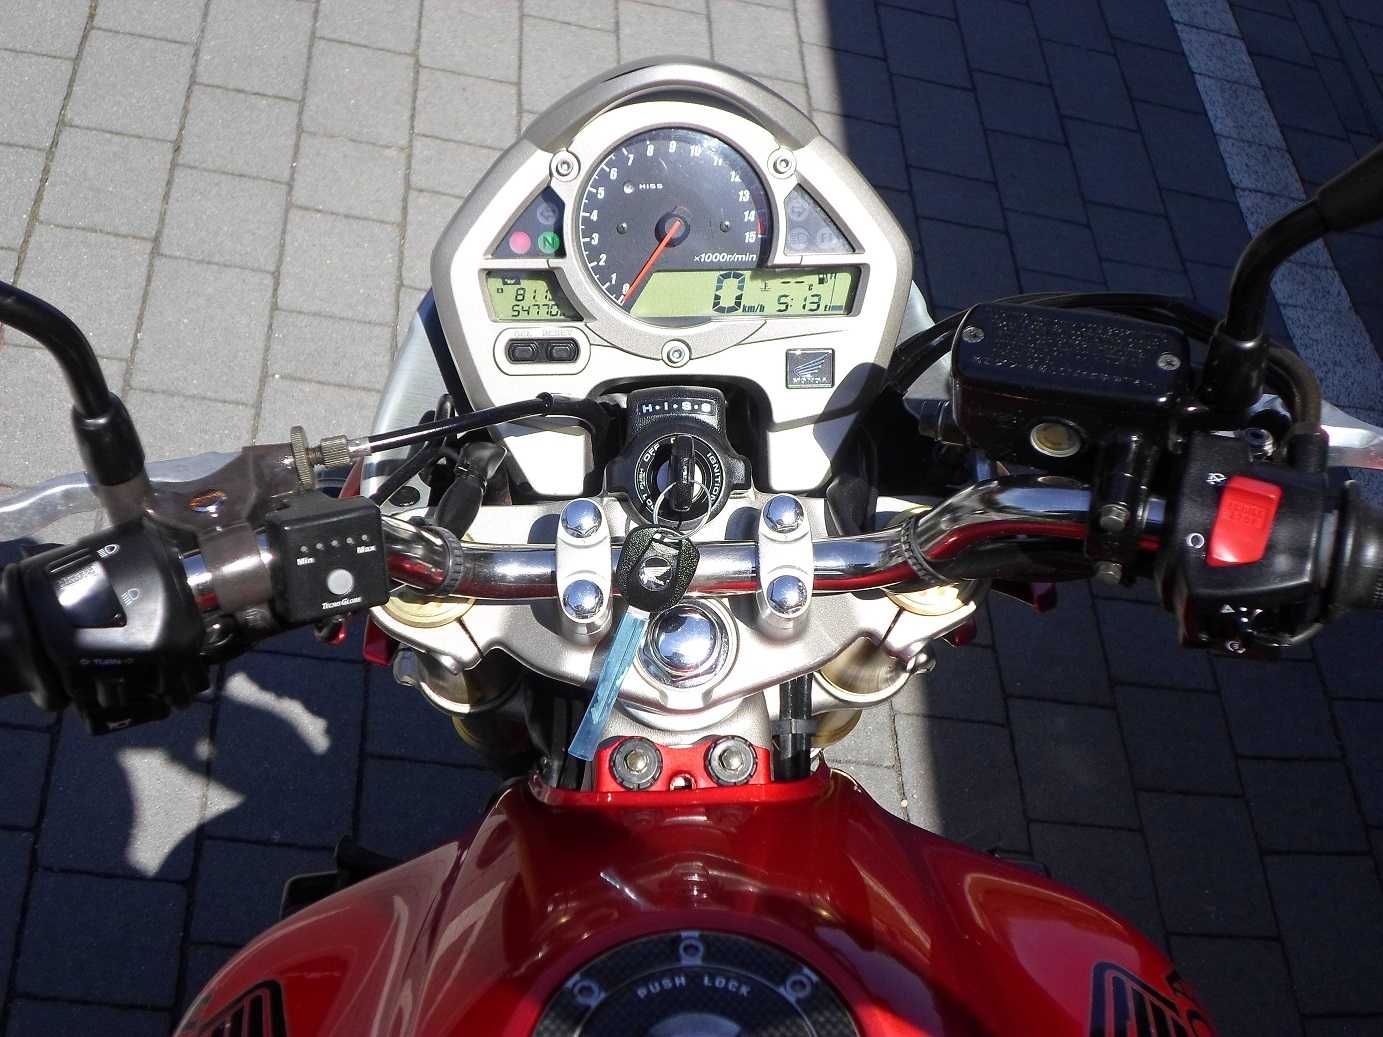 Honda CB 600 Hornet Oryginalny Lakier 54tyś.km Zamiana Transport